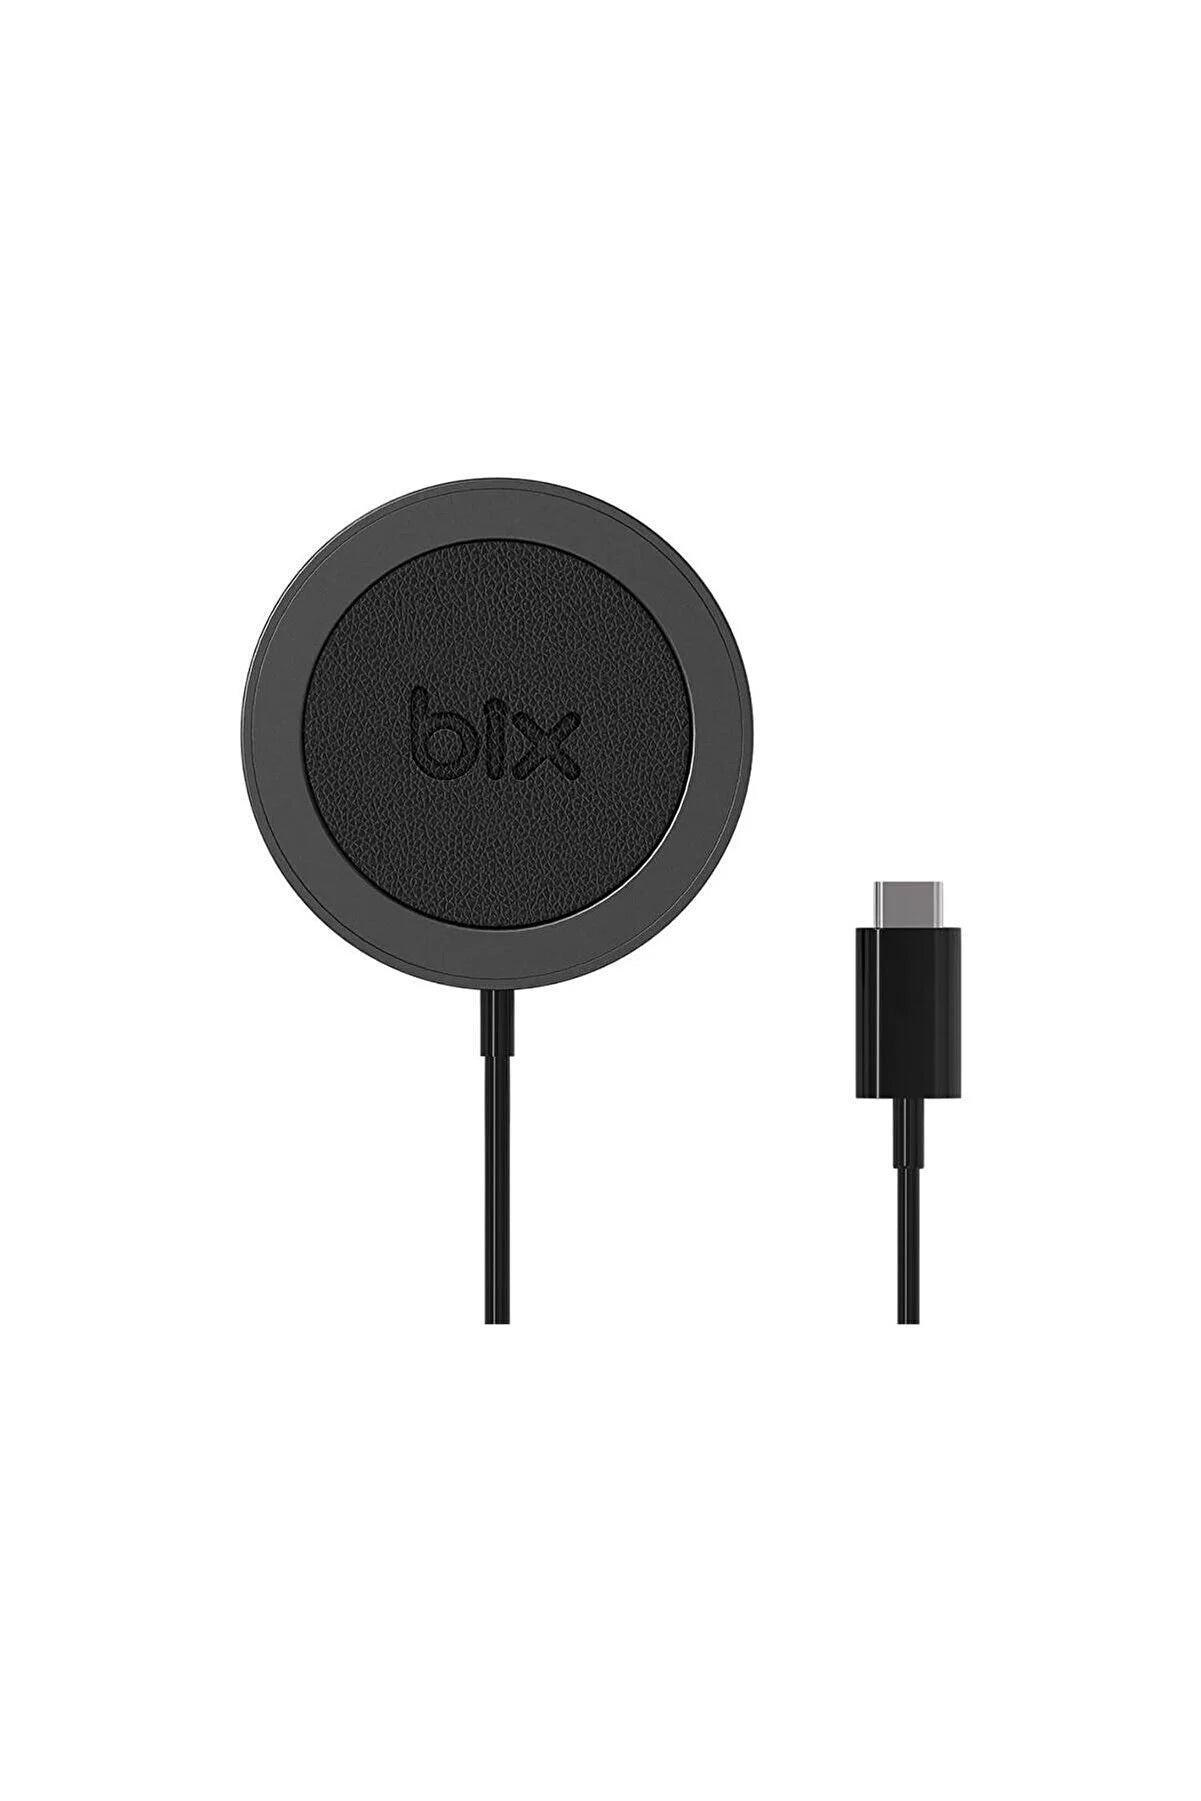 Bix BXMG15 15w Manyetik Kablosuz Şarj Cihazı Siyah